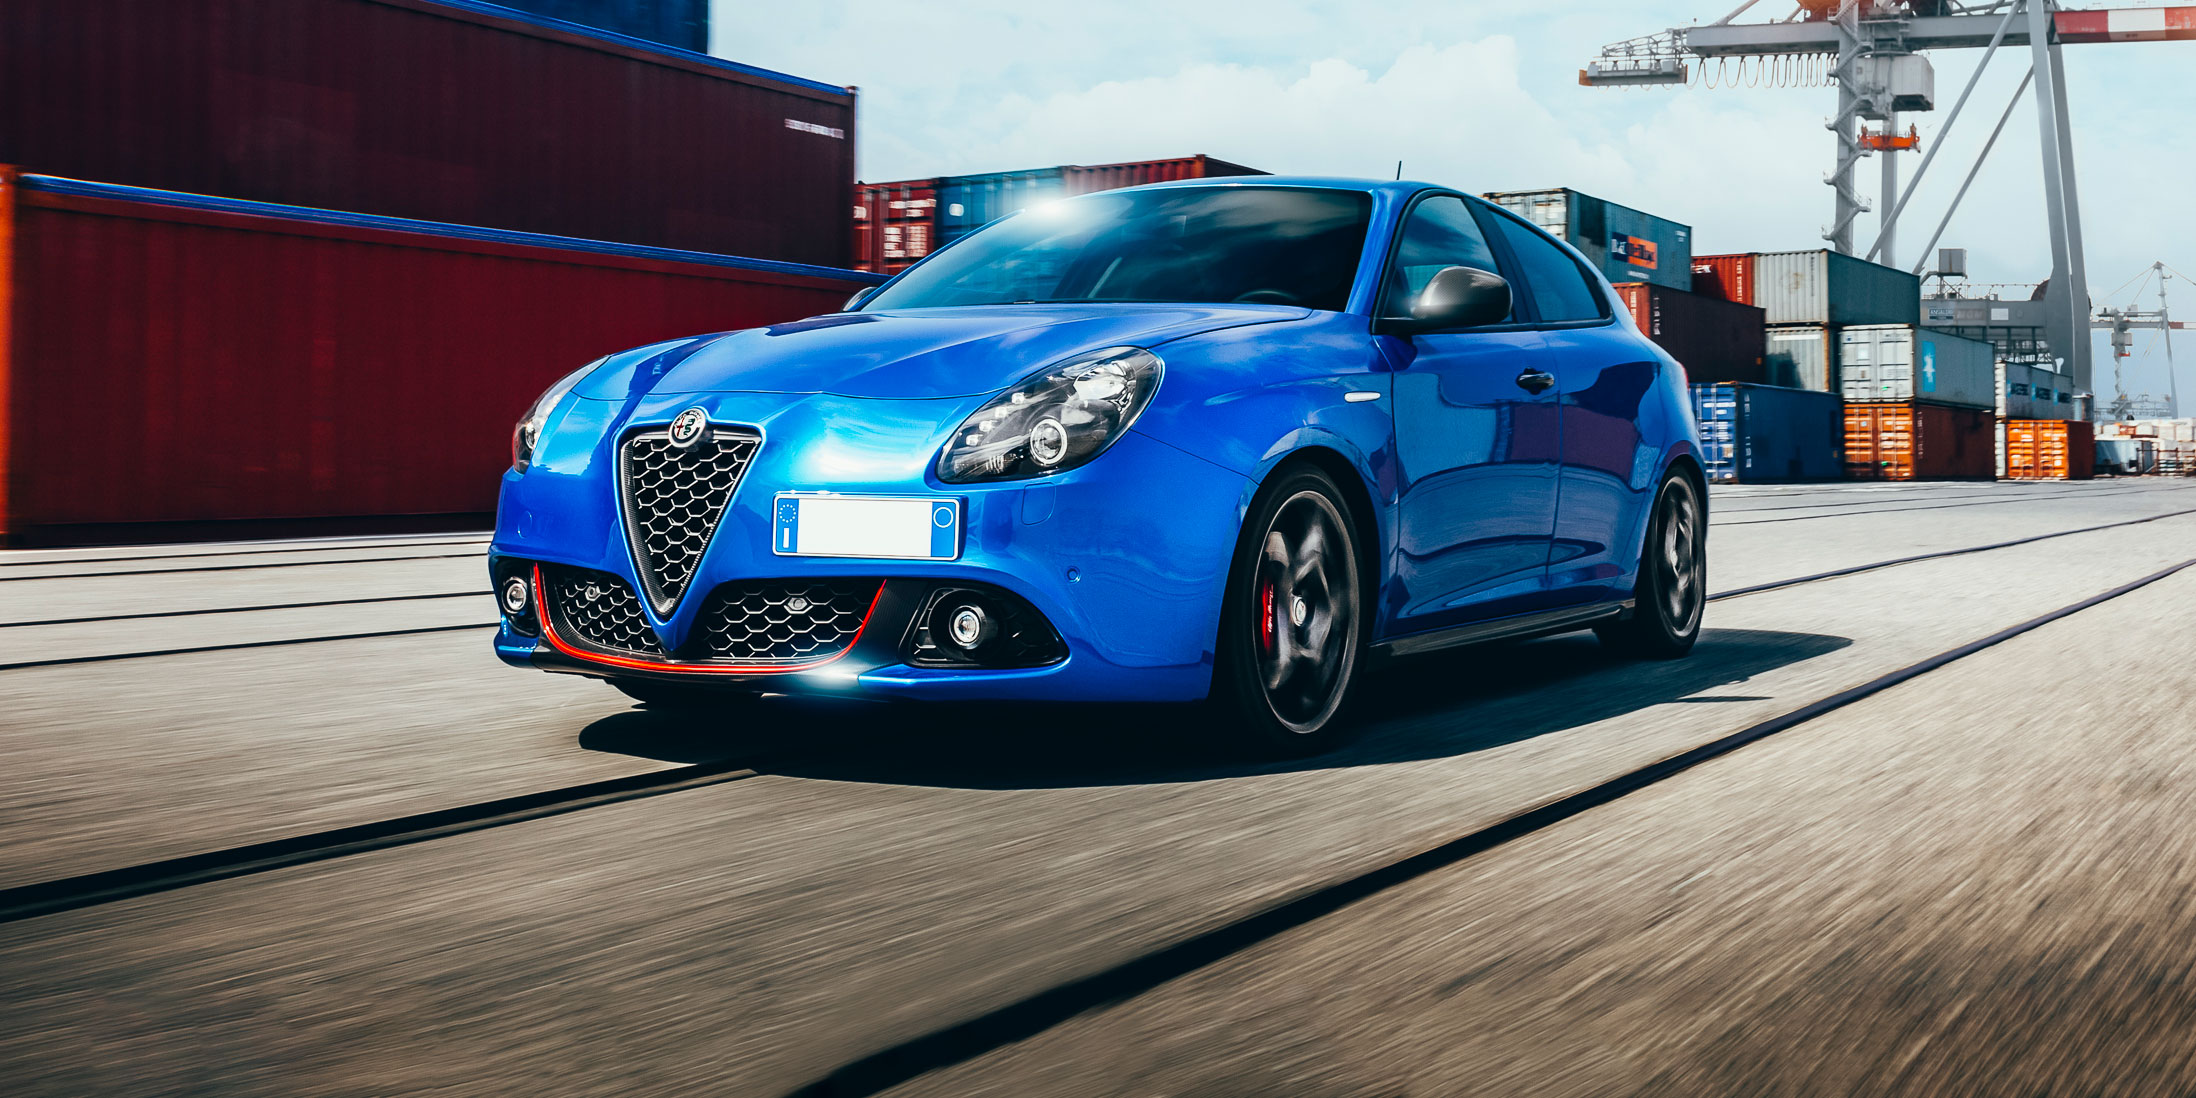 Car review: Alfa Romeo Giulietta, Motoring